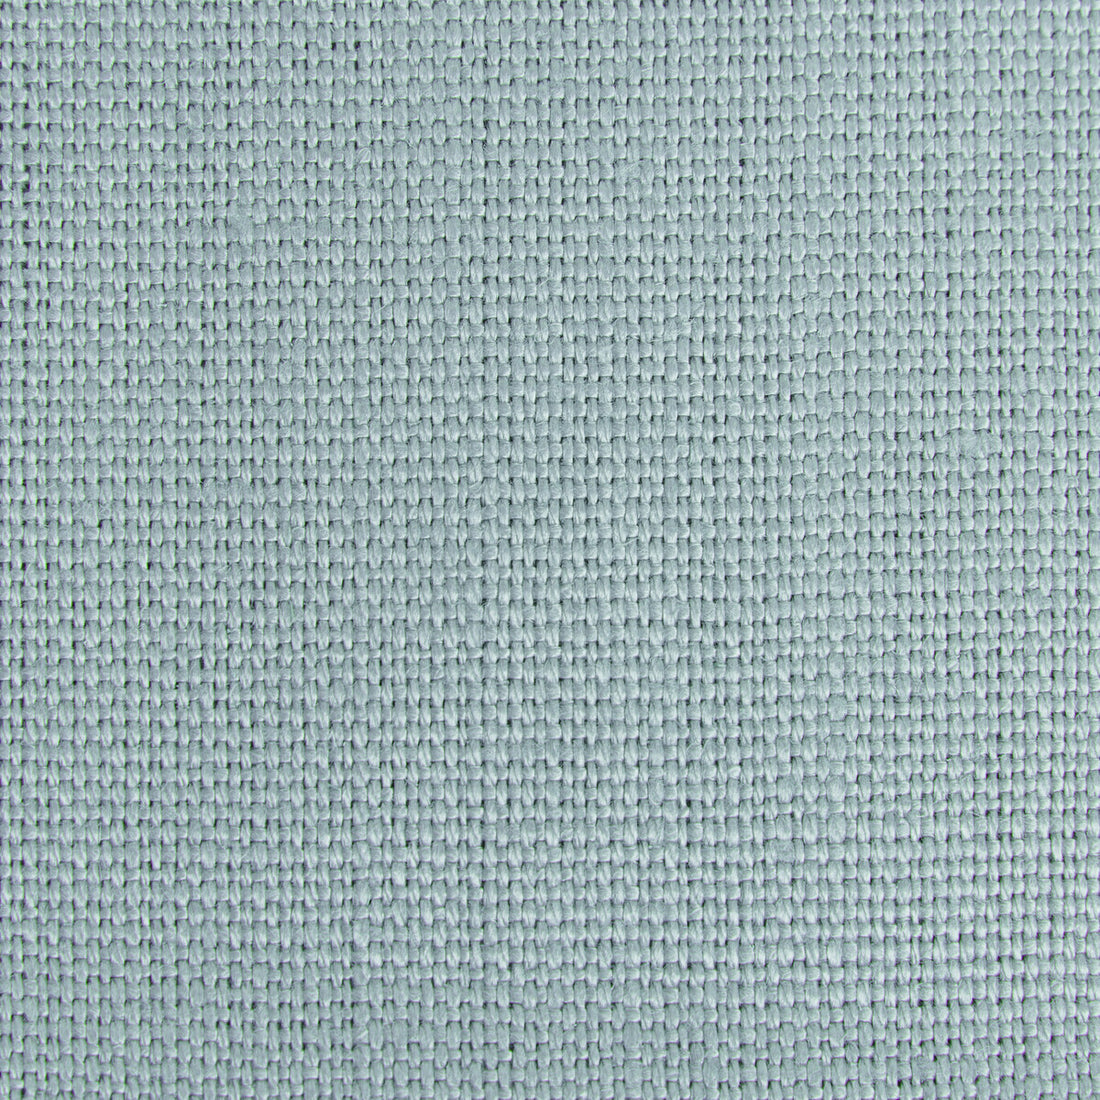 Stone Harbor fabric in true blue color - pattern 27591.151.0 - by Kravet Basics